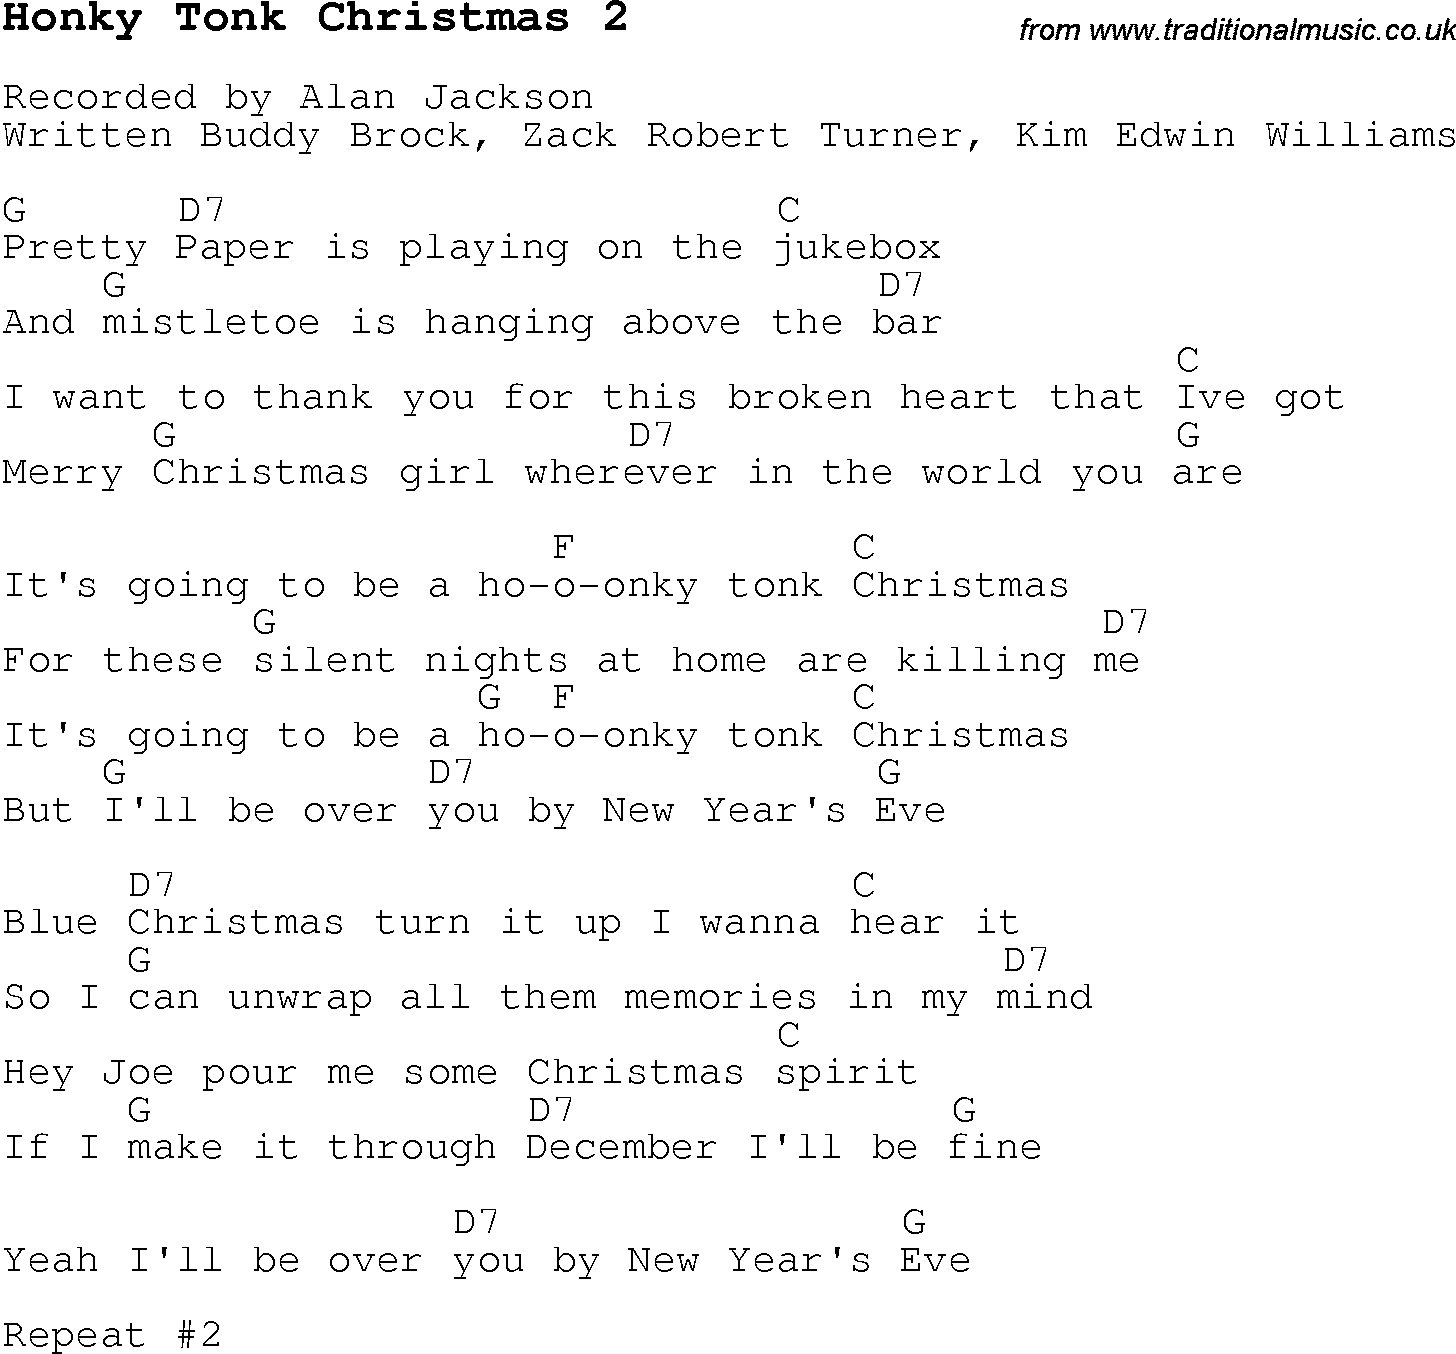 Christmas Songs and Carols, lyrics with chords for guitar banjo for Honky Tonk Christmas 2